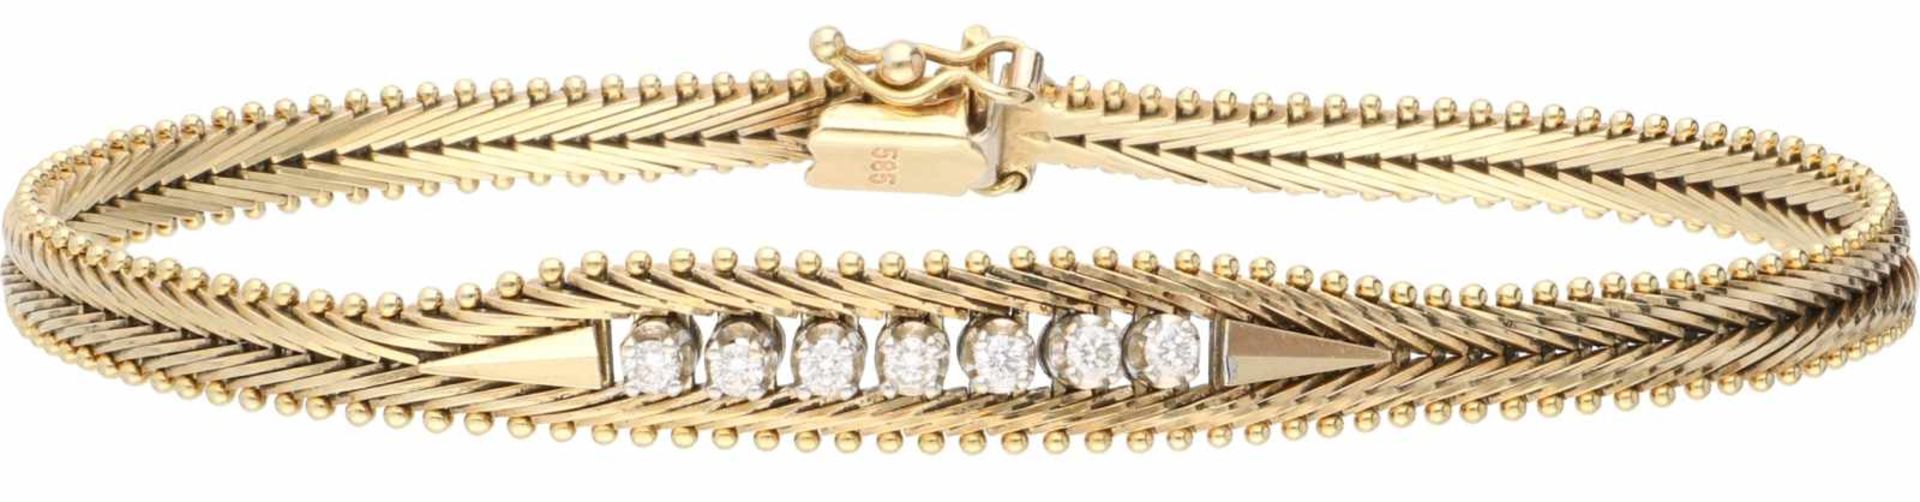 Necklace / bracelet yellow gold, ca. 0.43 carat diamond - 14 ct. - Bild 4 aus 5